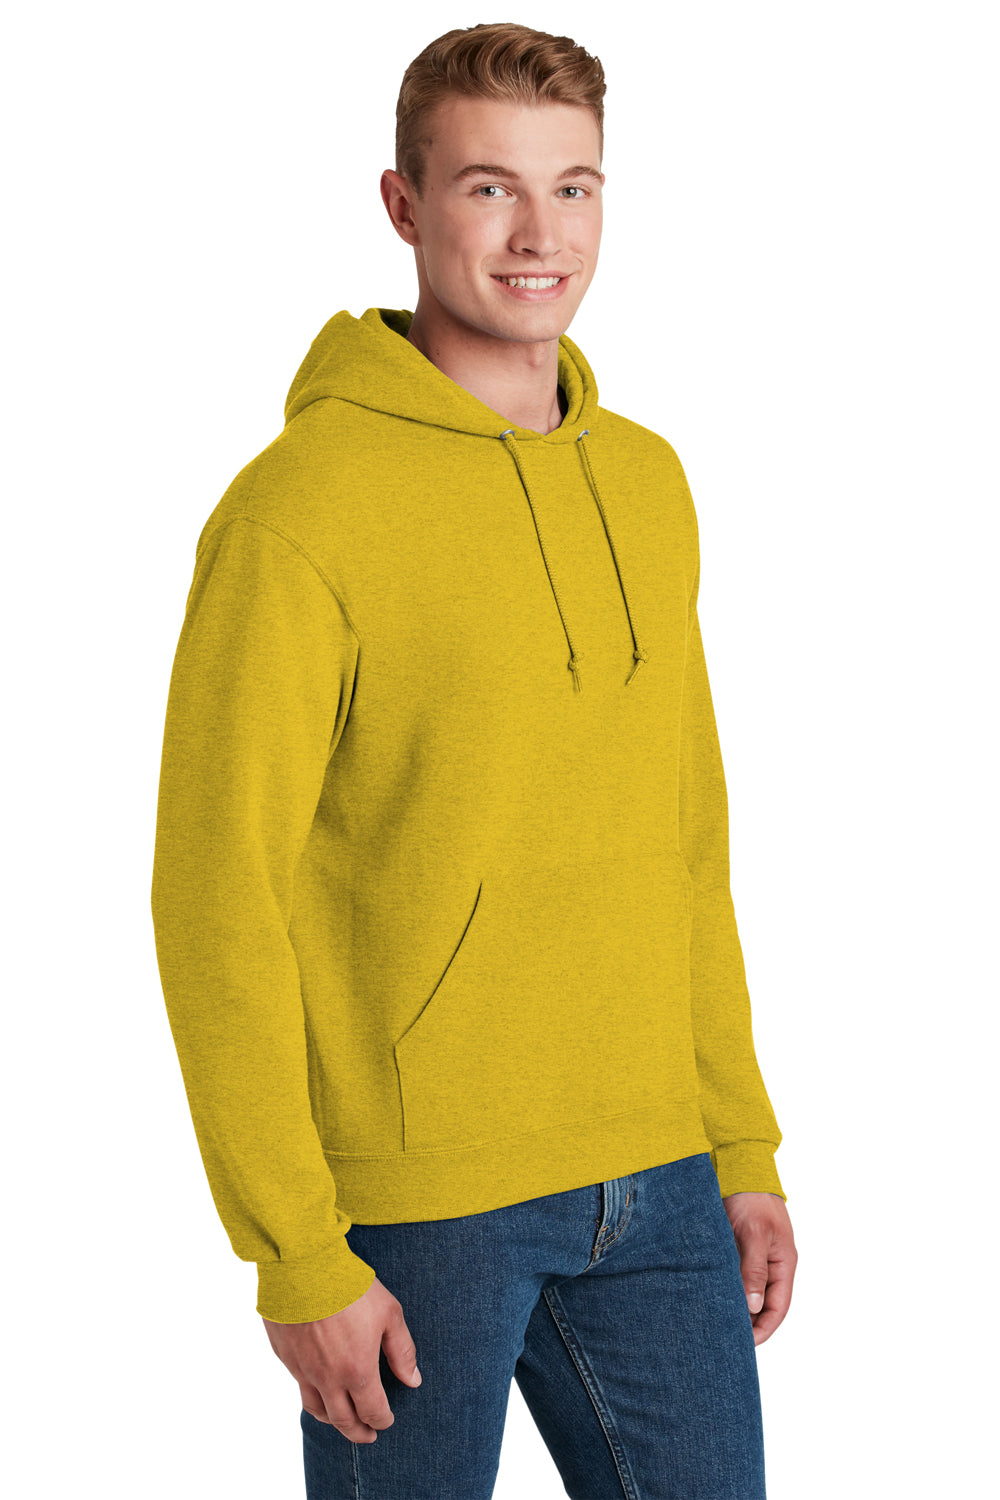 Jerzees 996M/996/996MR Mens NuBlend Fleece Hooded Sweatshirt Hoodie Heather Mustard Yellow 3Q